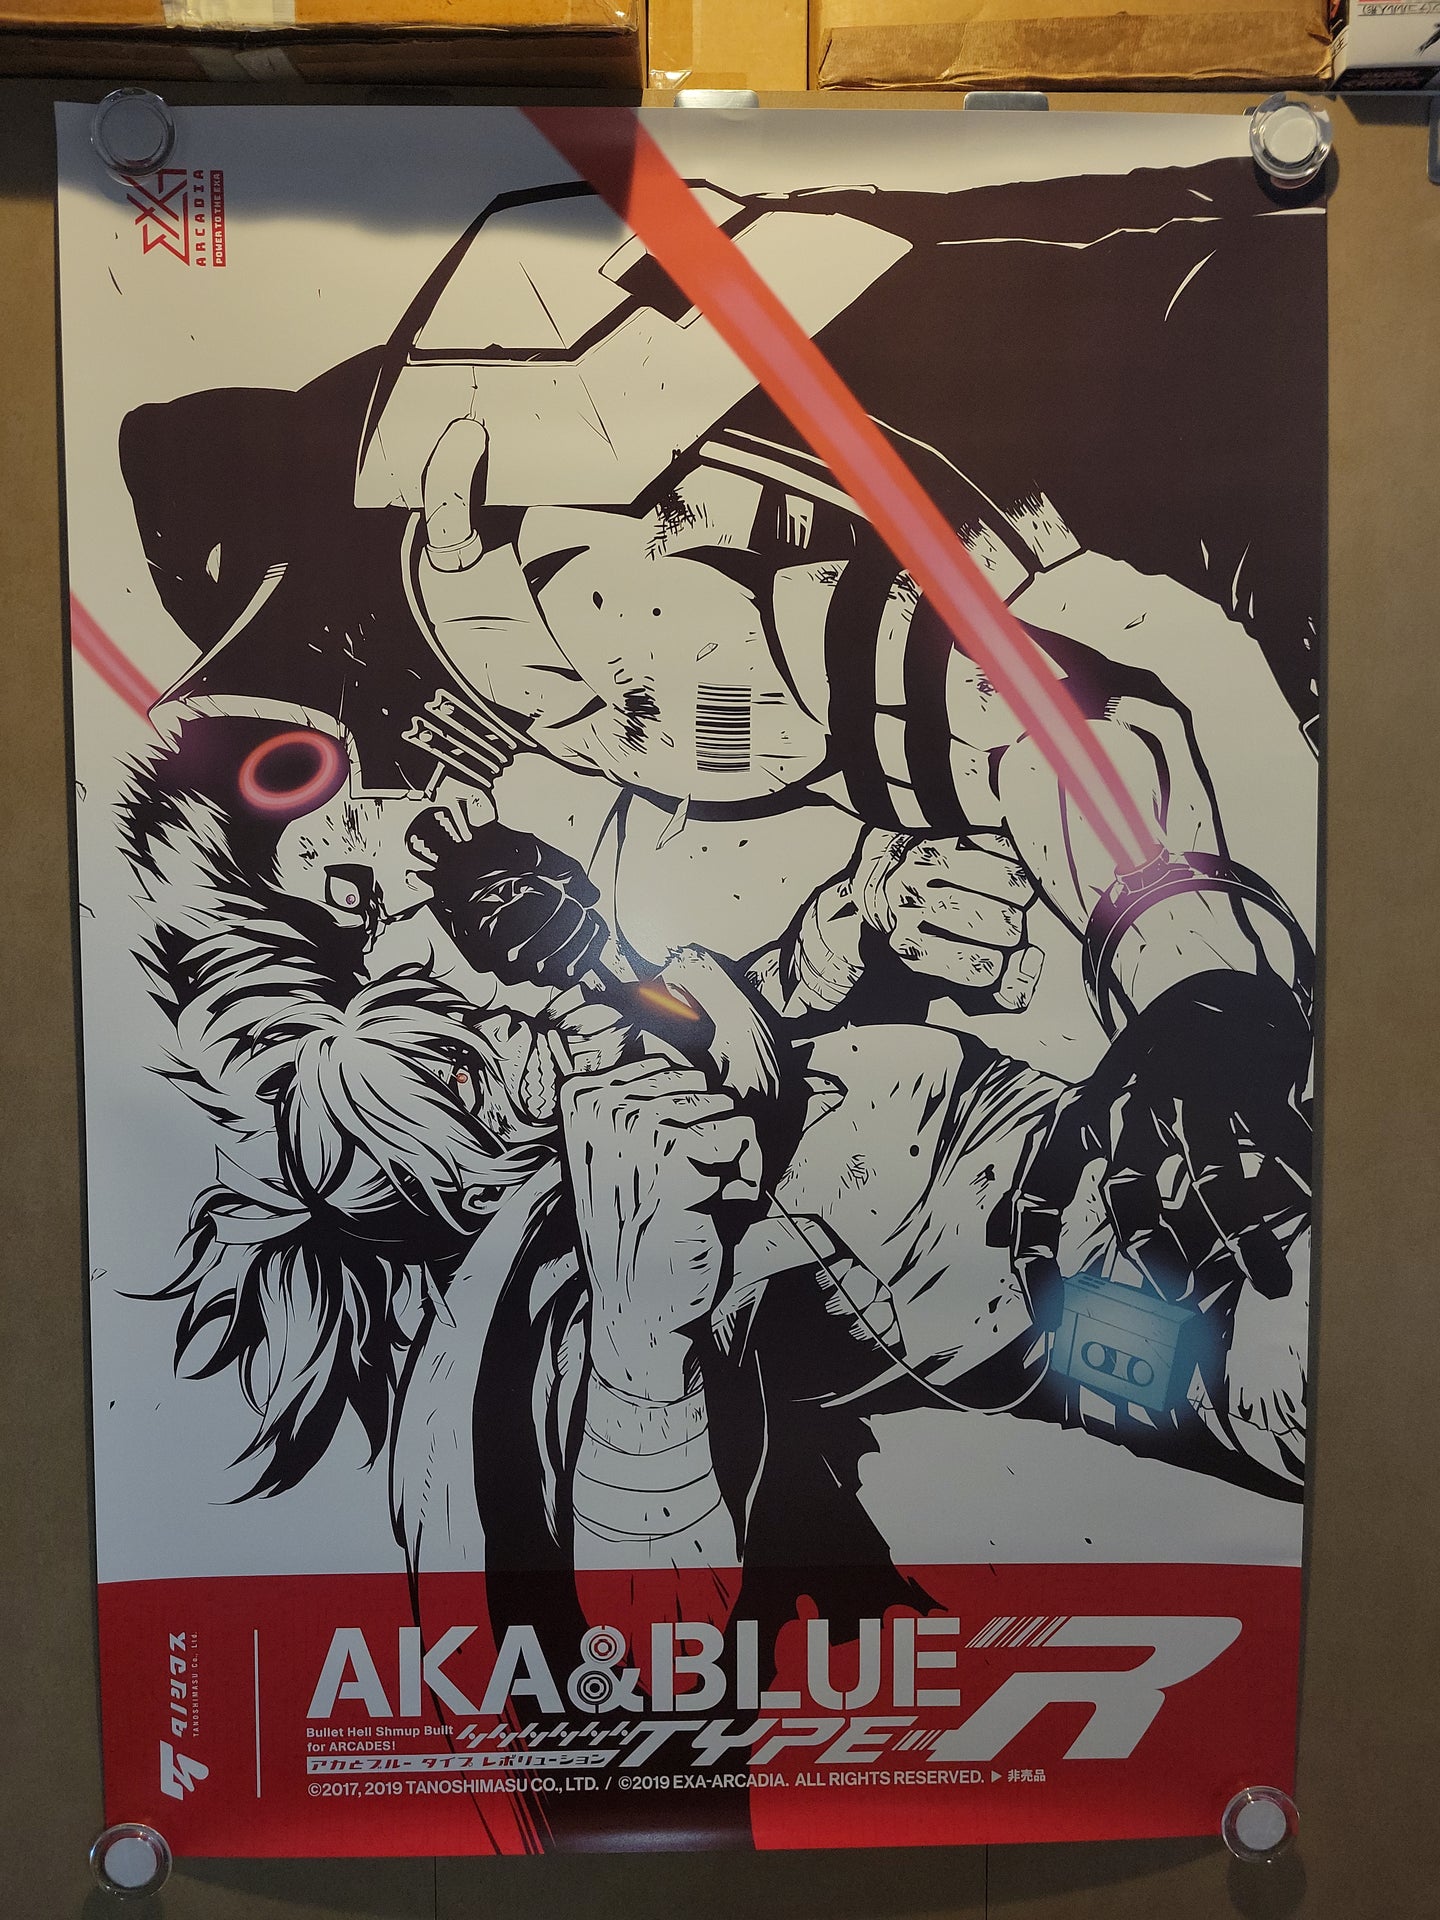 Aka to Blue R Vewlix artset - Arcade poster artset